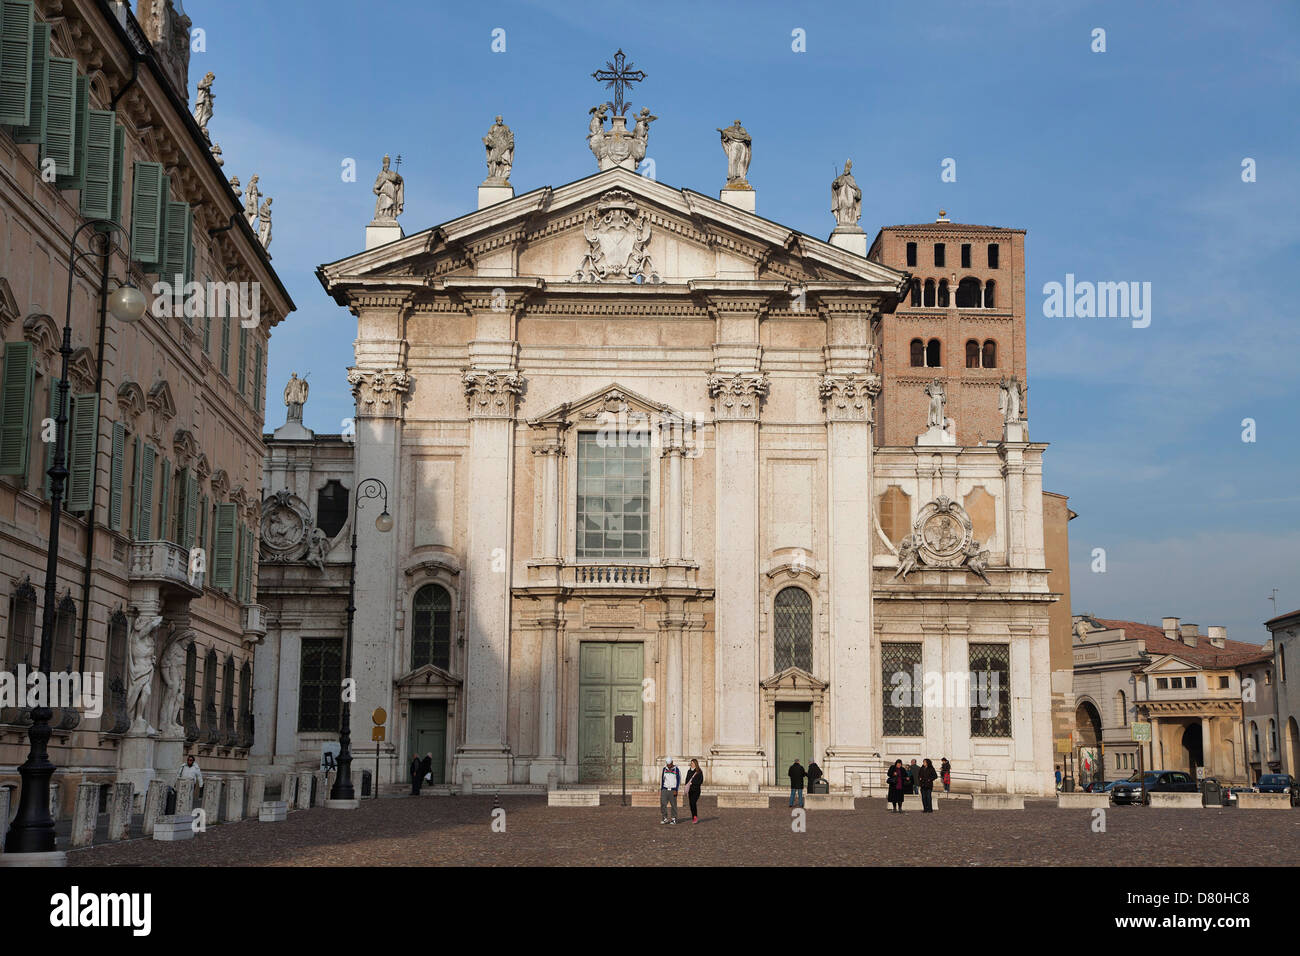 The cathedral in Mantova (Mantua), Italy. Stock Photo